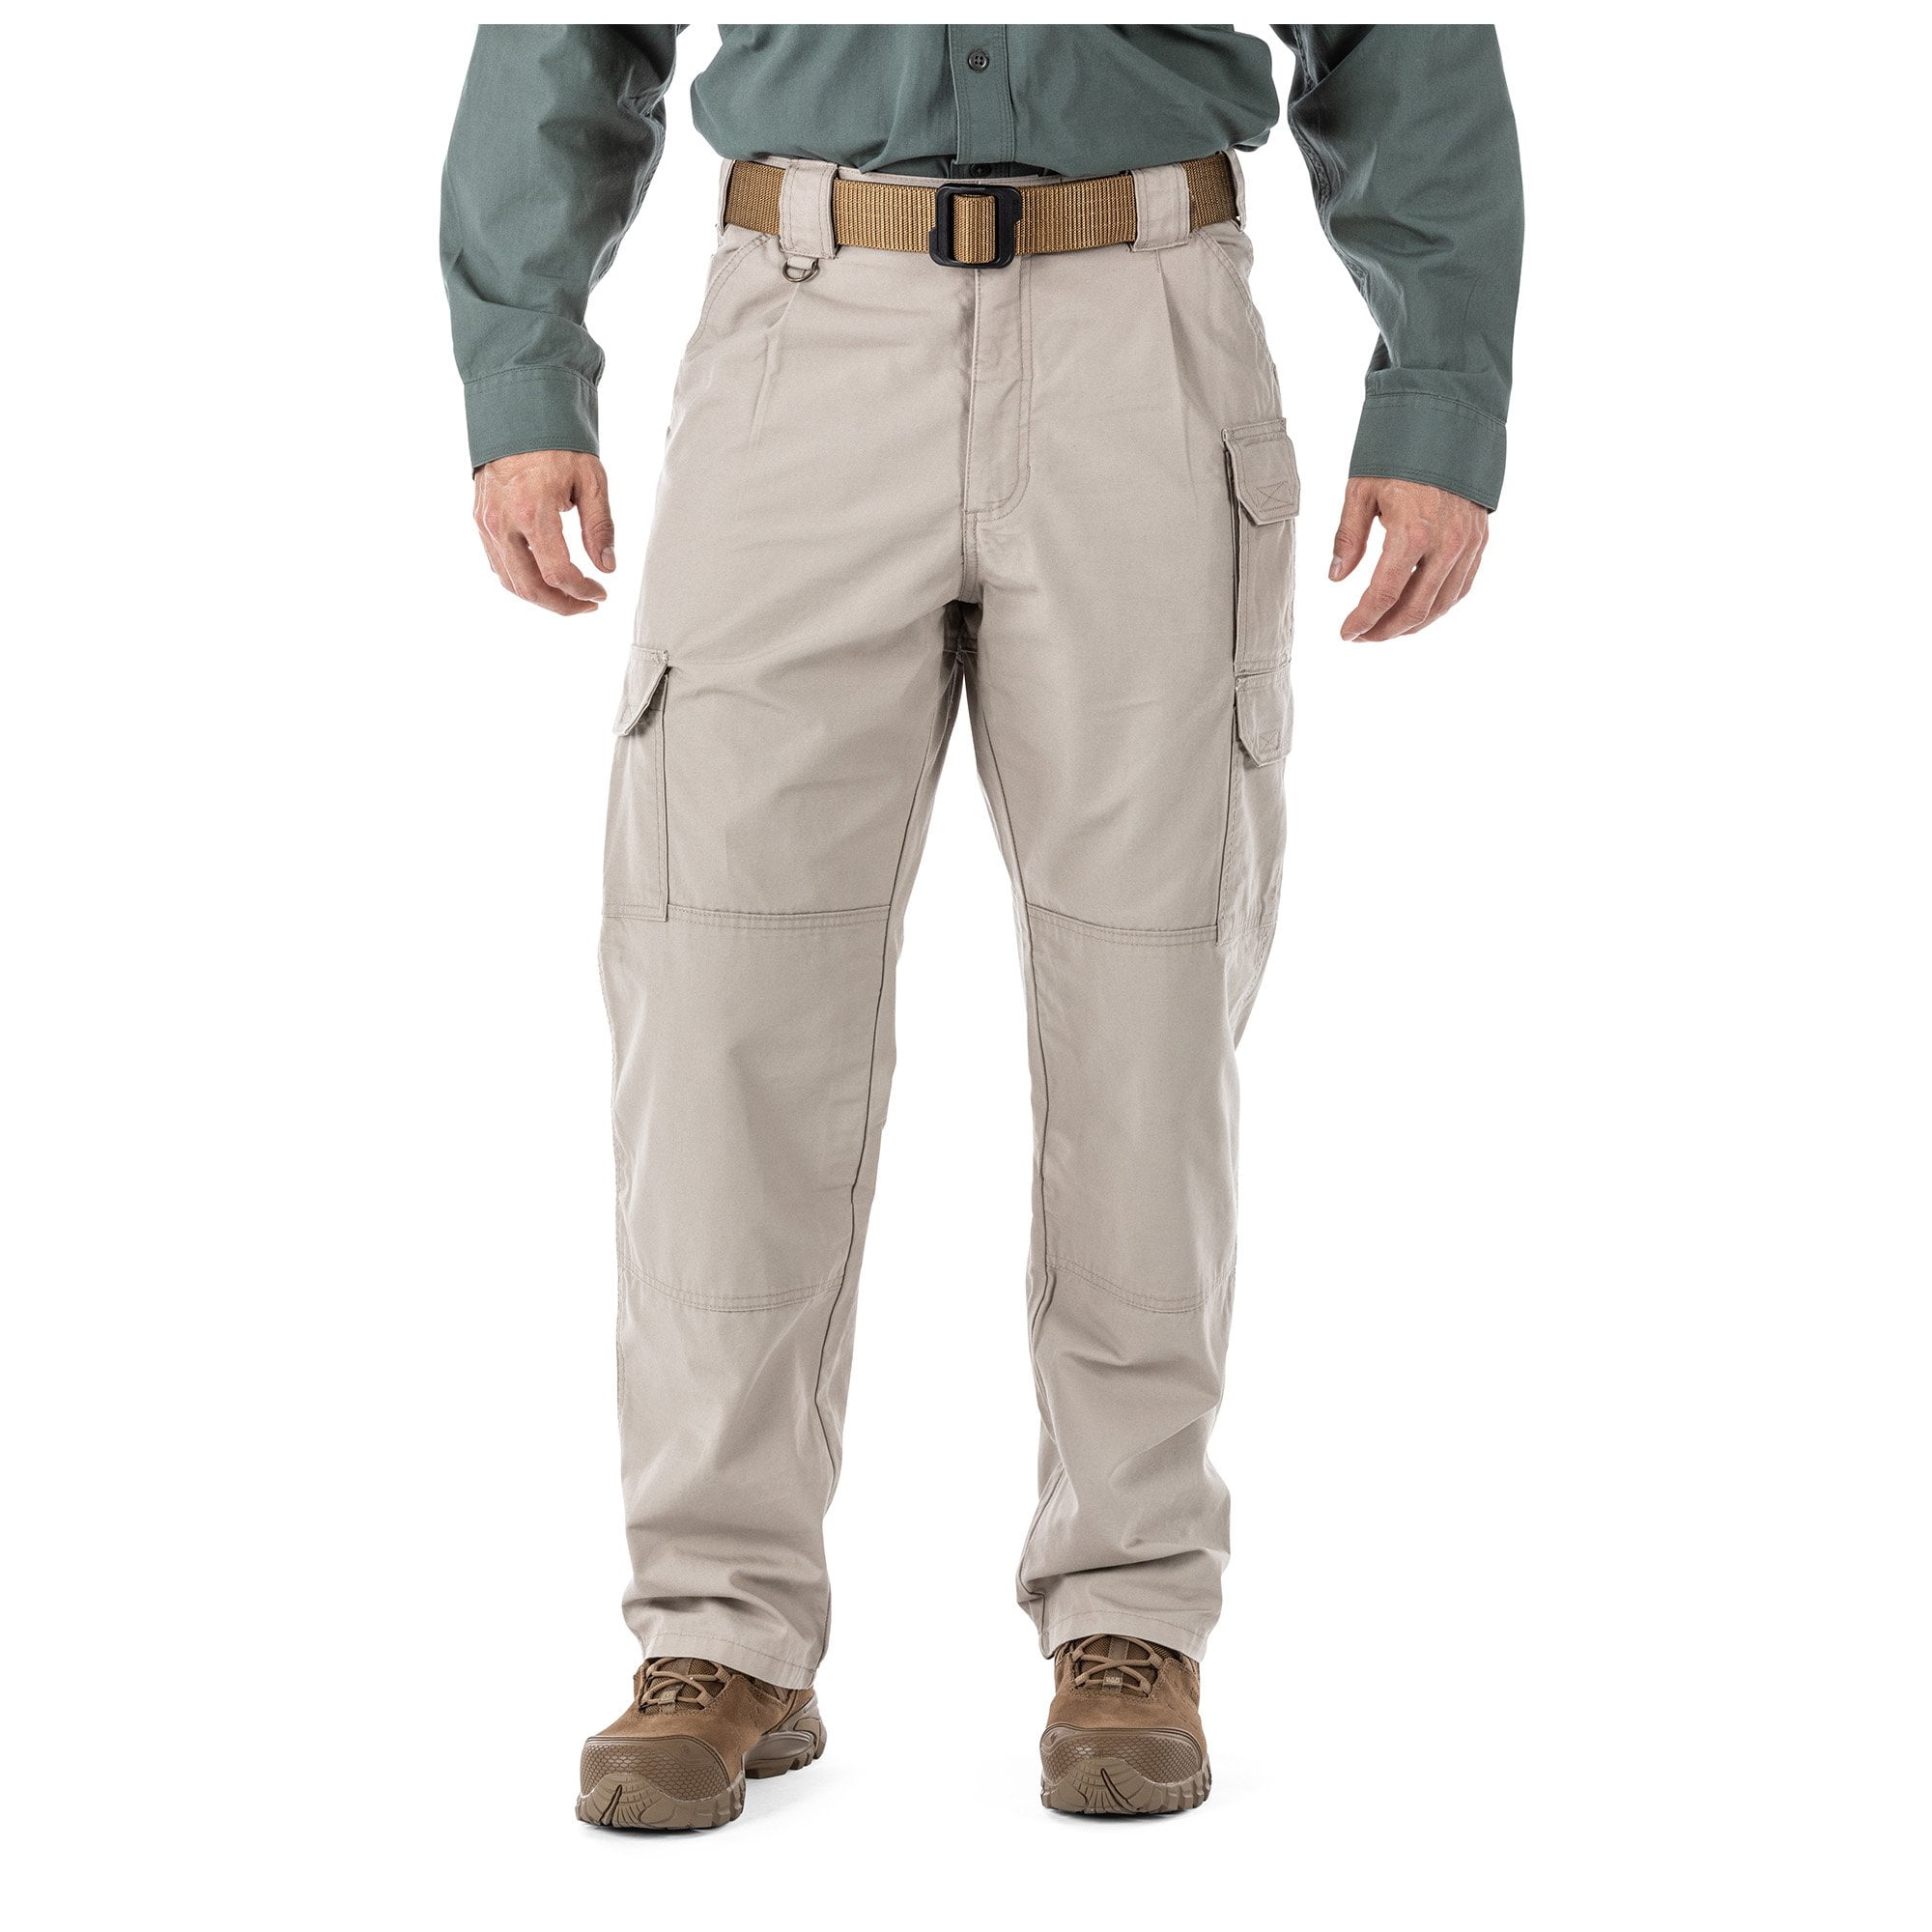 5.11 Tactical Men's Active Work Pants, Superior Fit, Double Reinforced ...